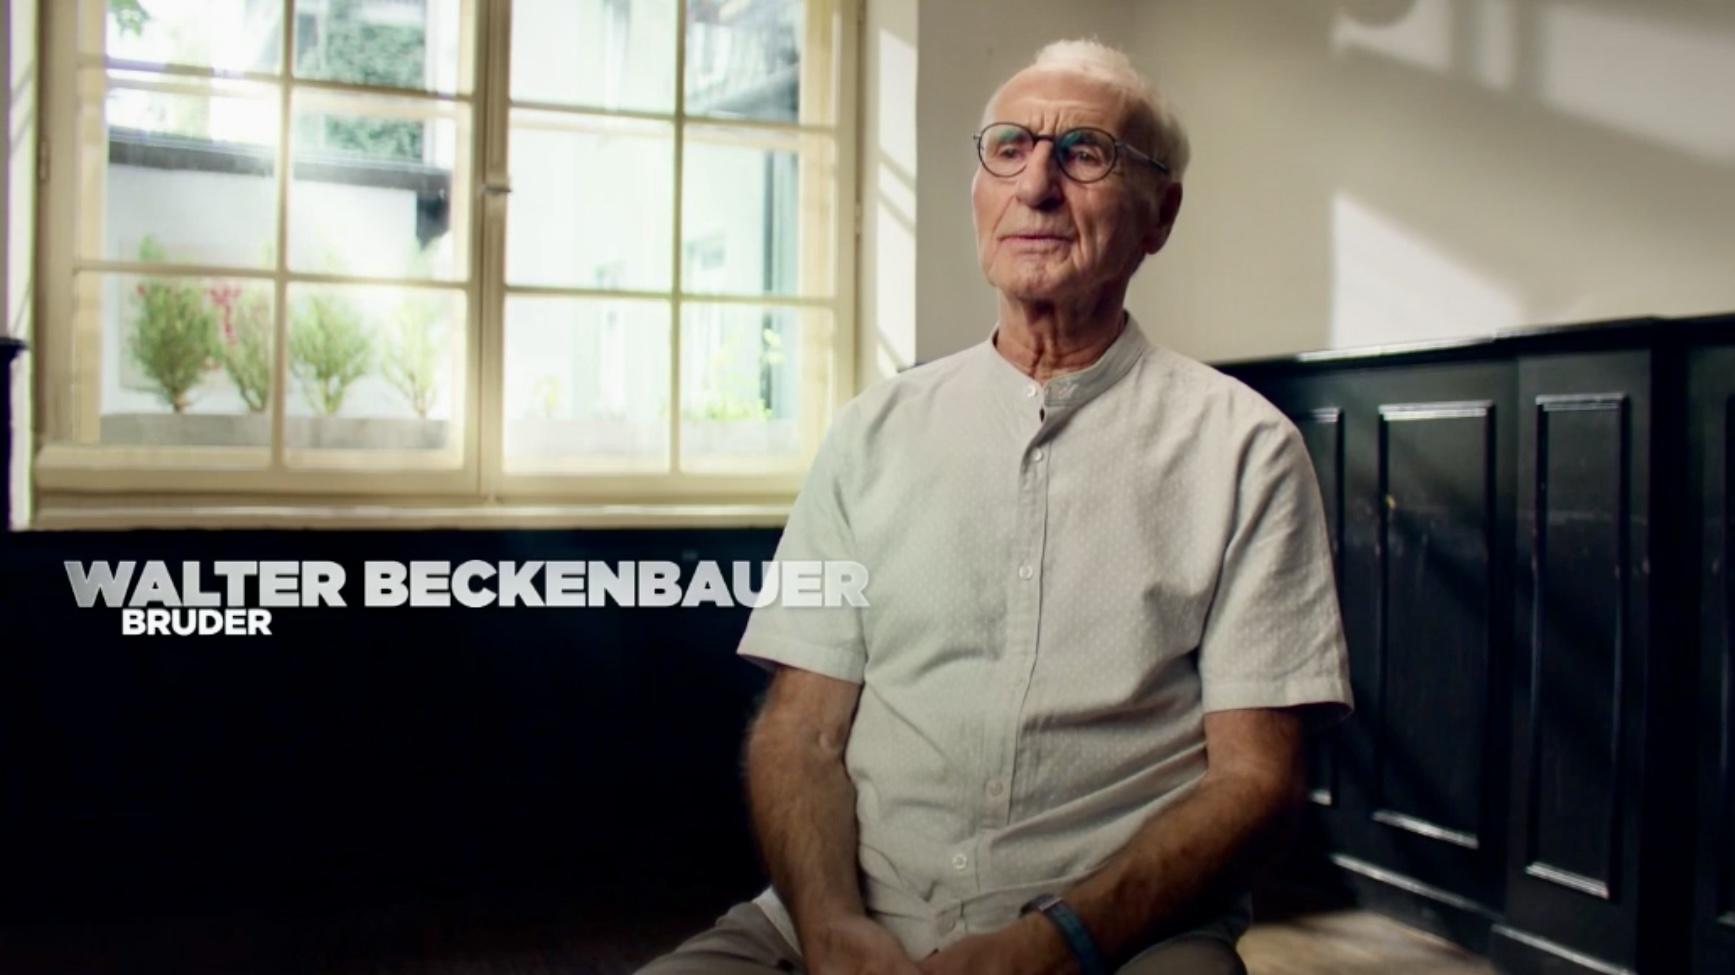 Walter Beckenbauer